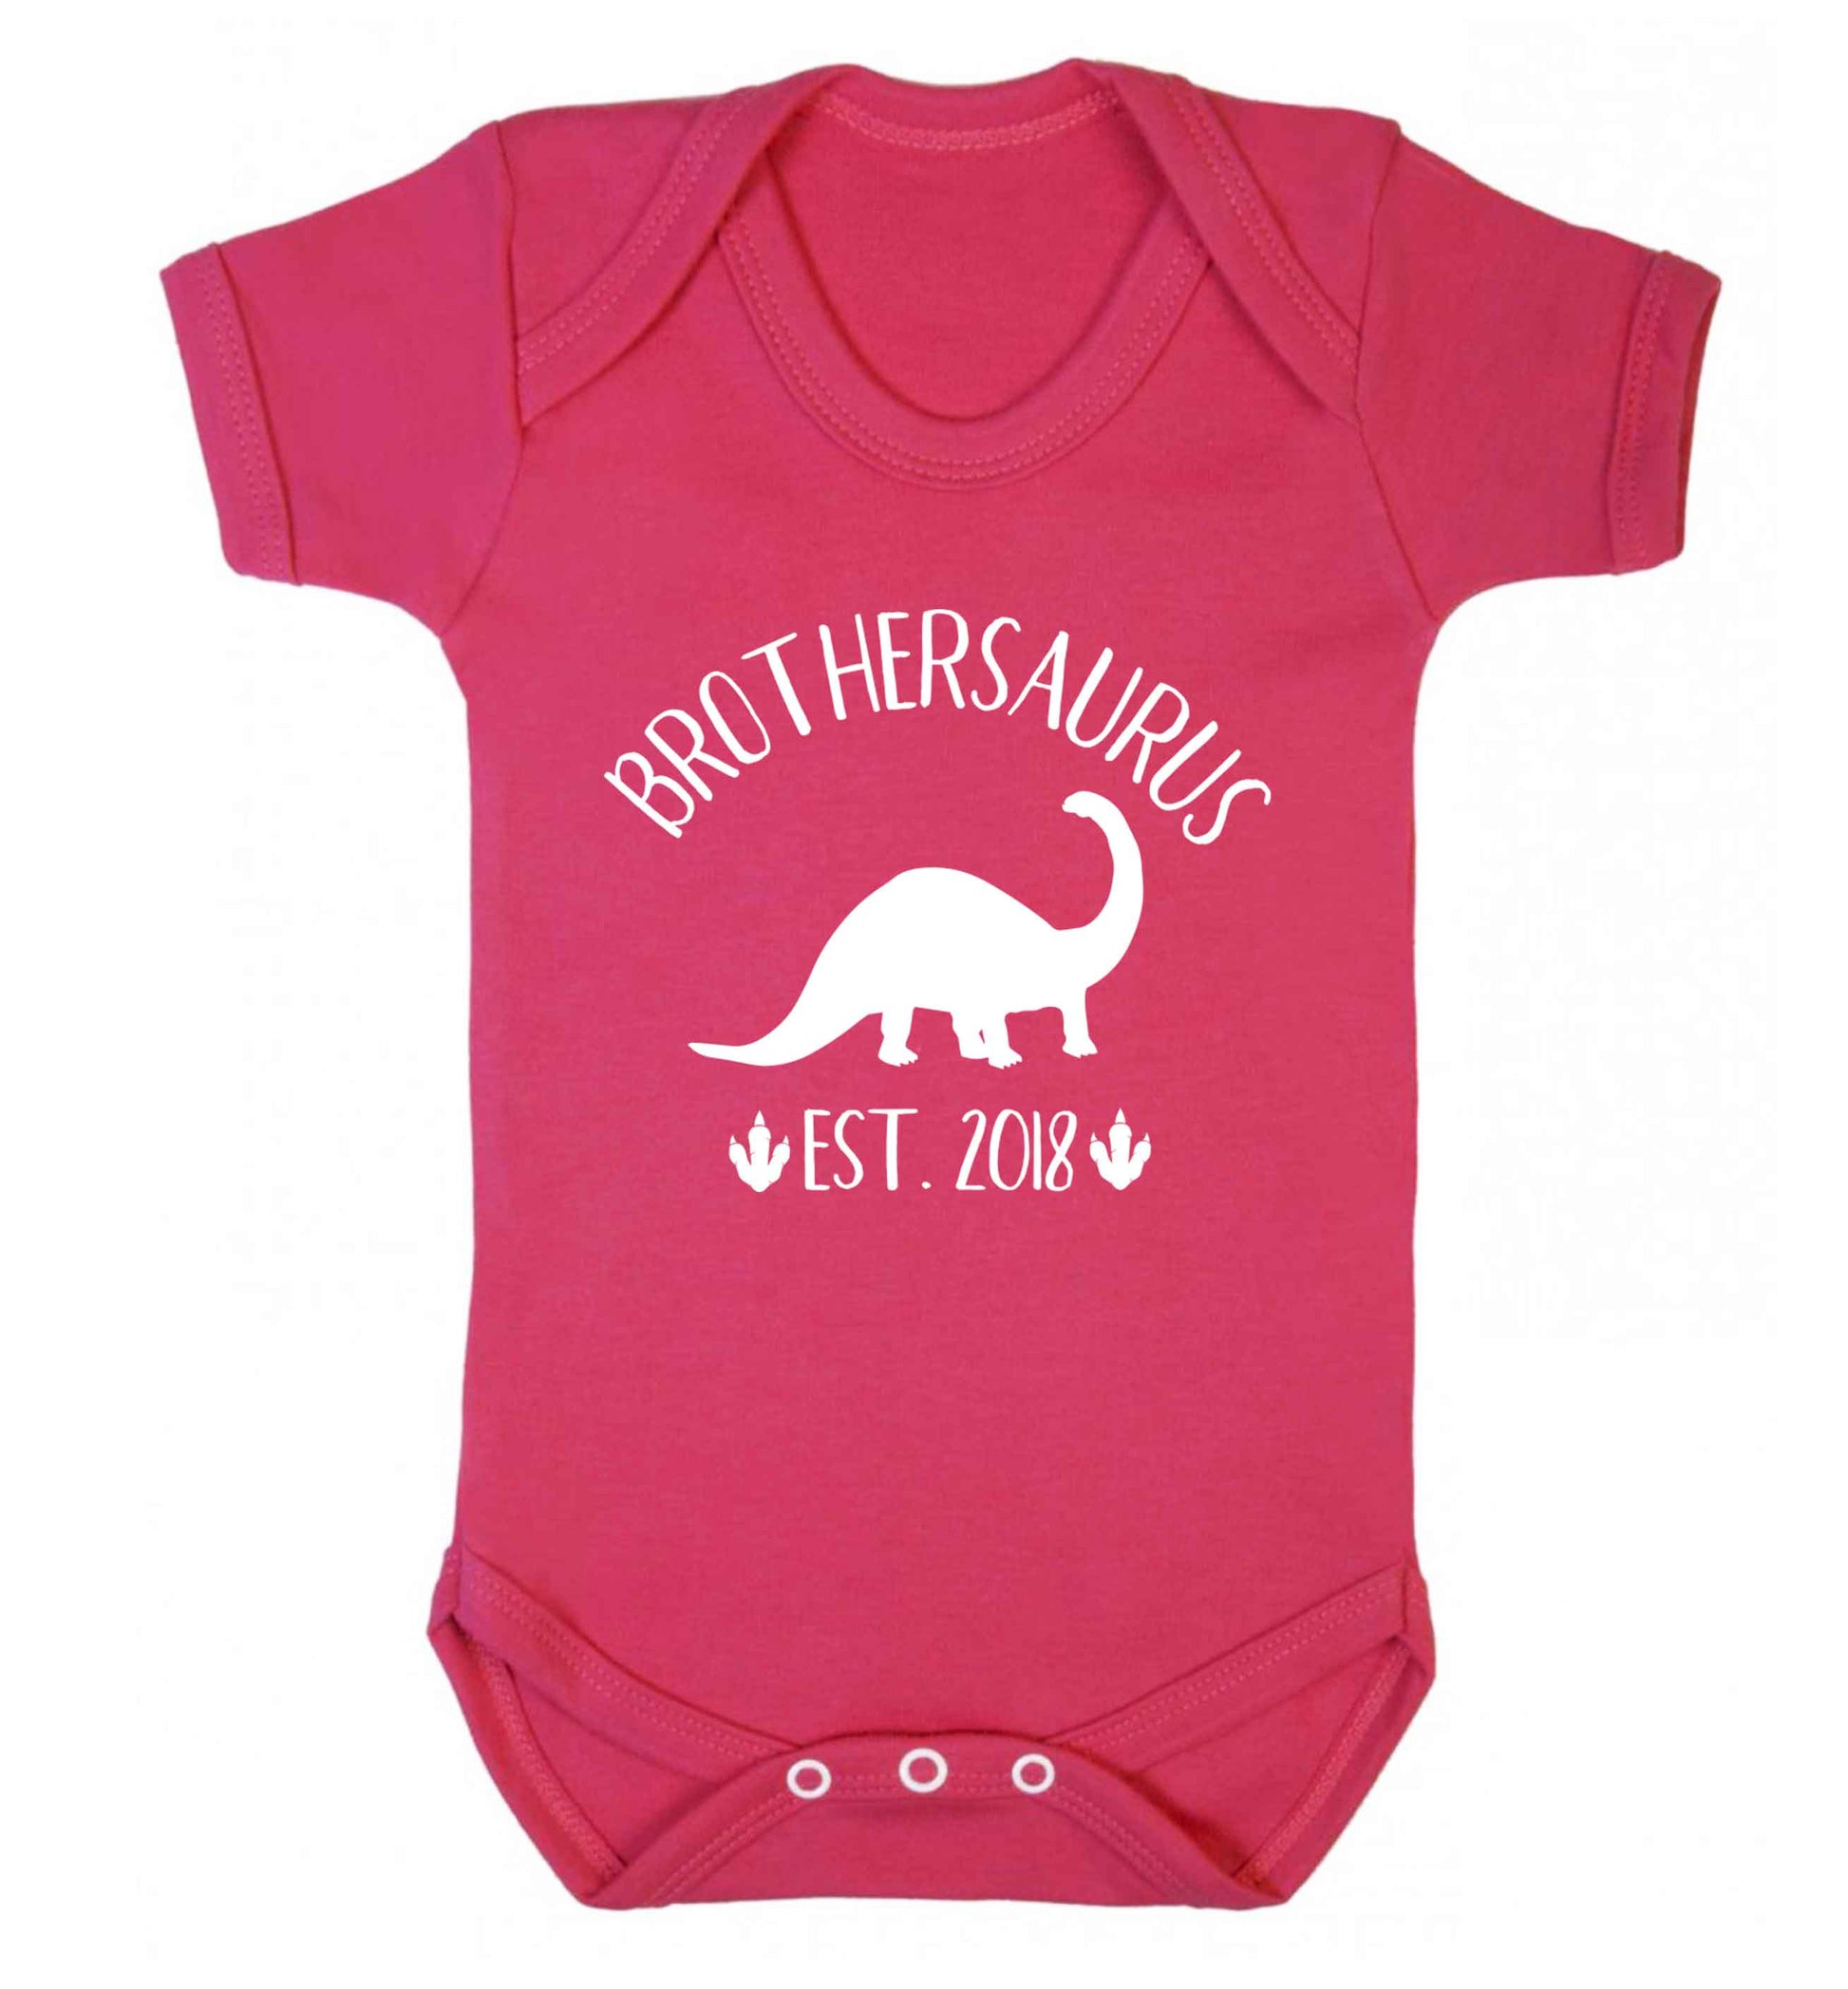 Personalised brothersaurus since (custom date) Baby Vest dark pink 18-24 months